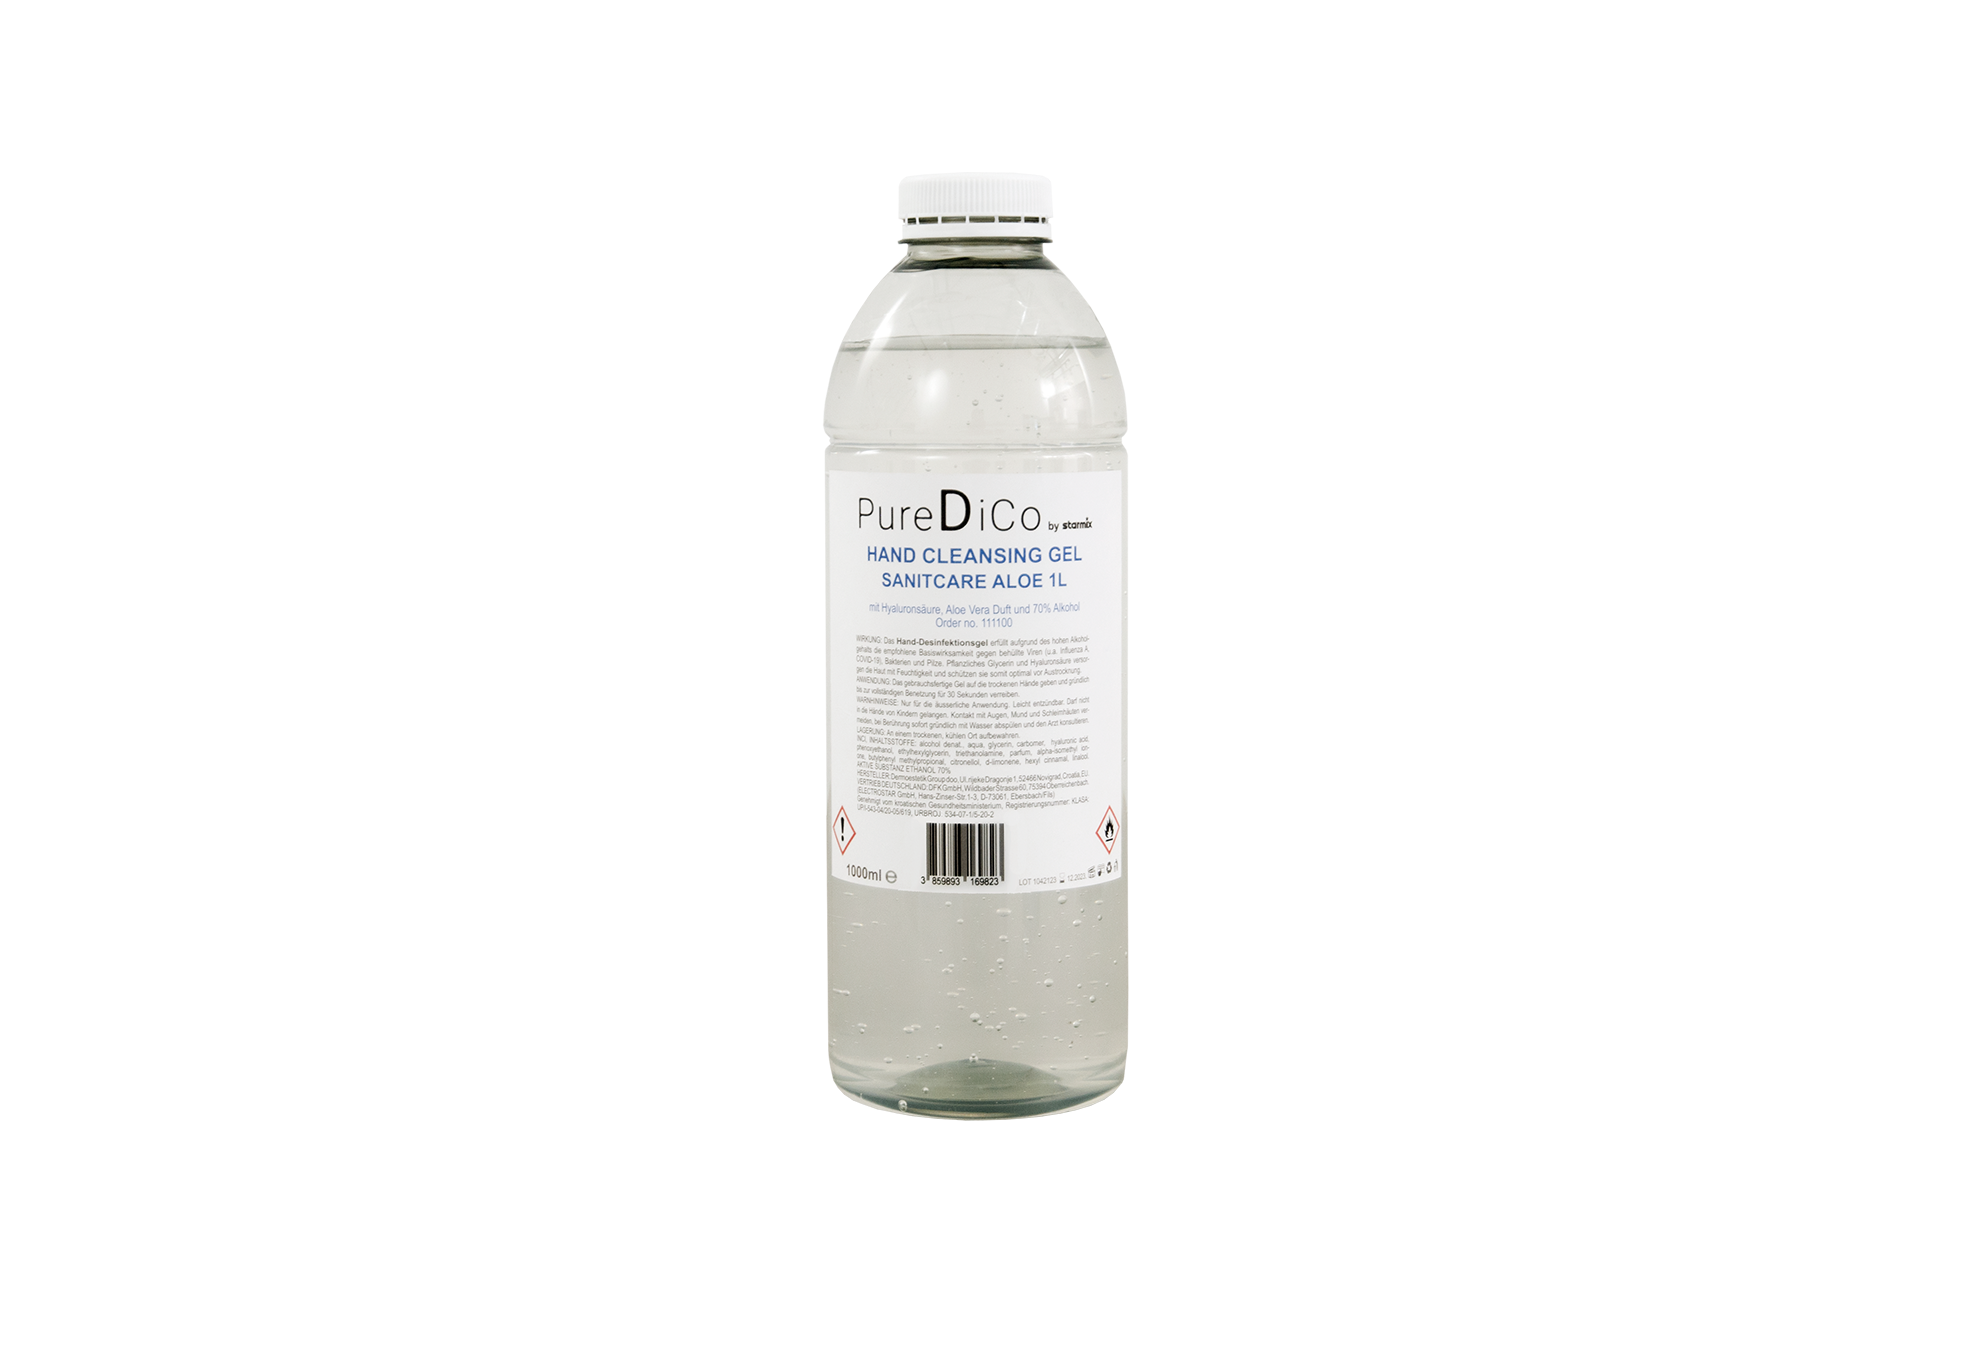 Disinfection gel SanitCare Aloe 1L